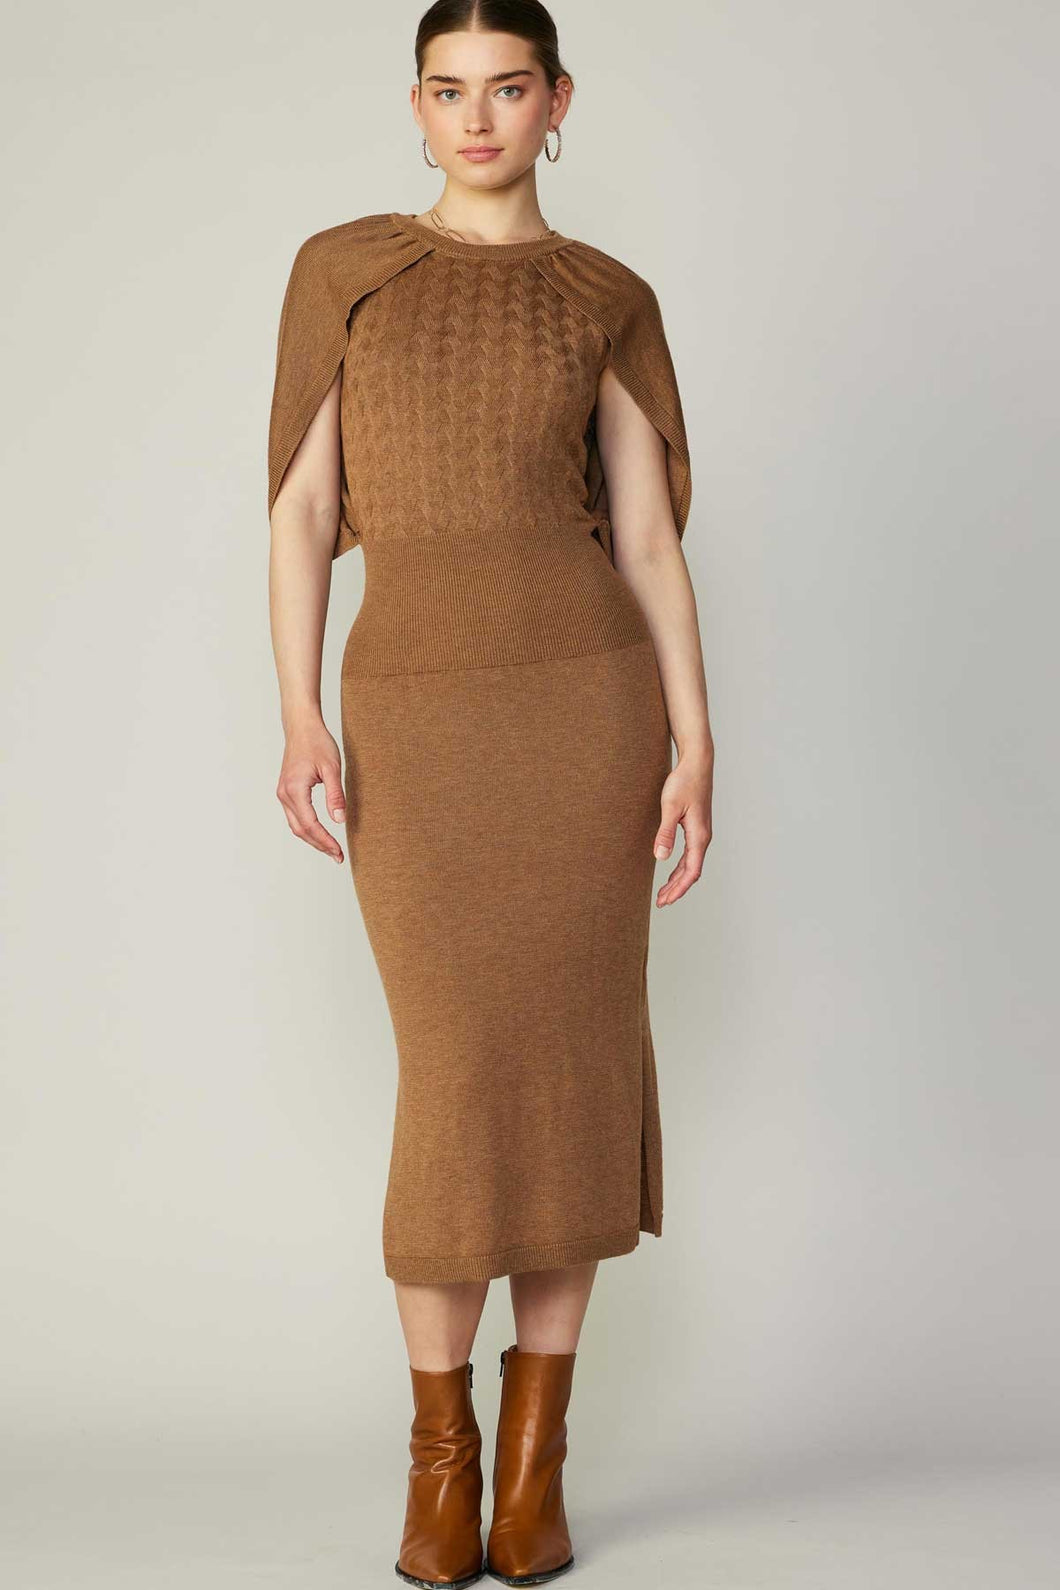 Caramel Brown Cape Sweater Dress